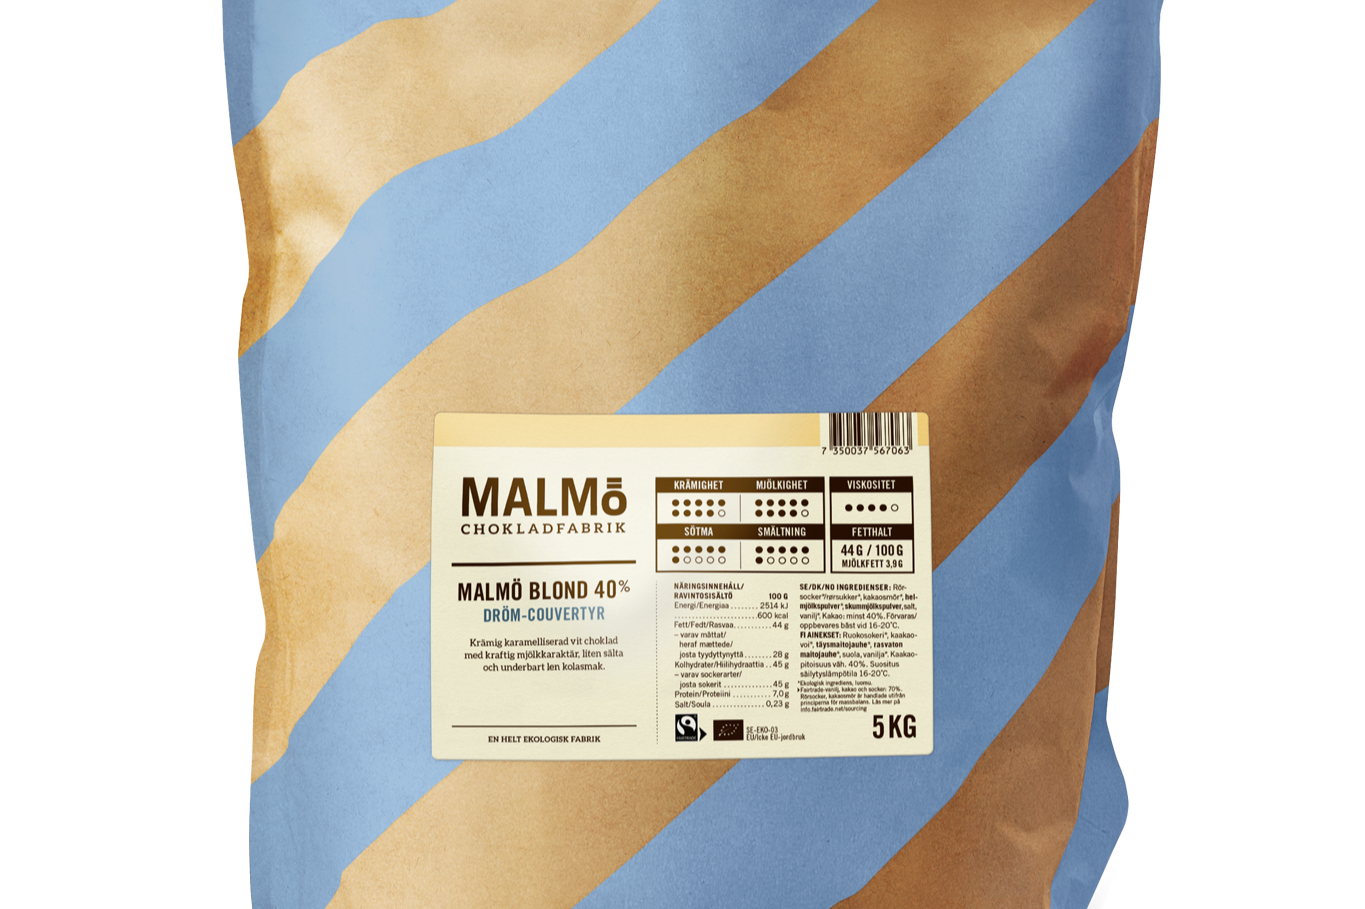 Malmö Blond